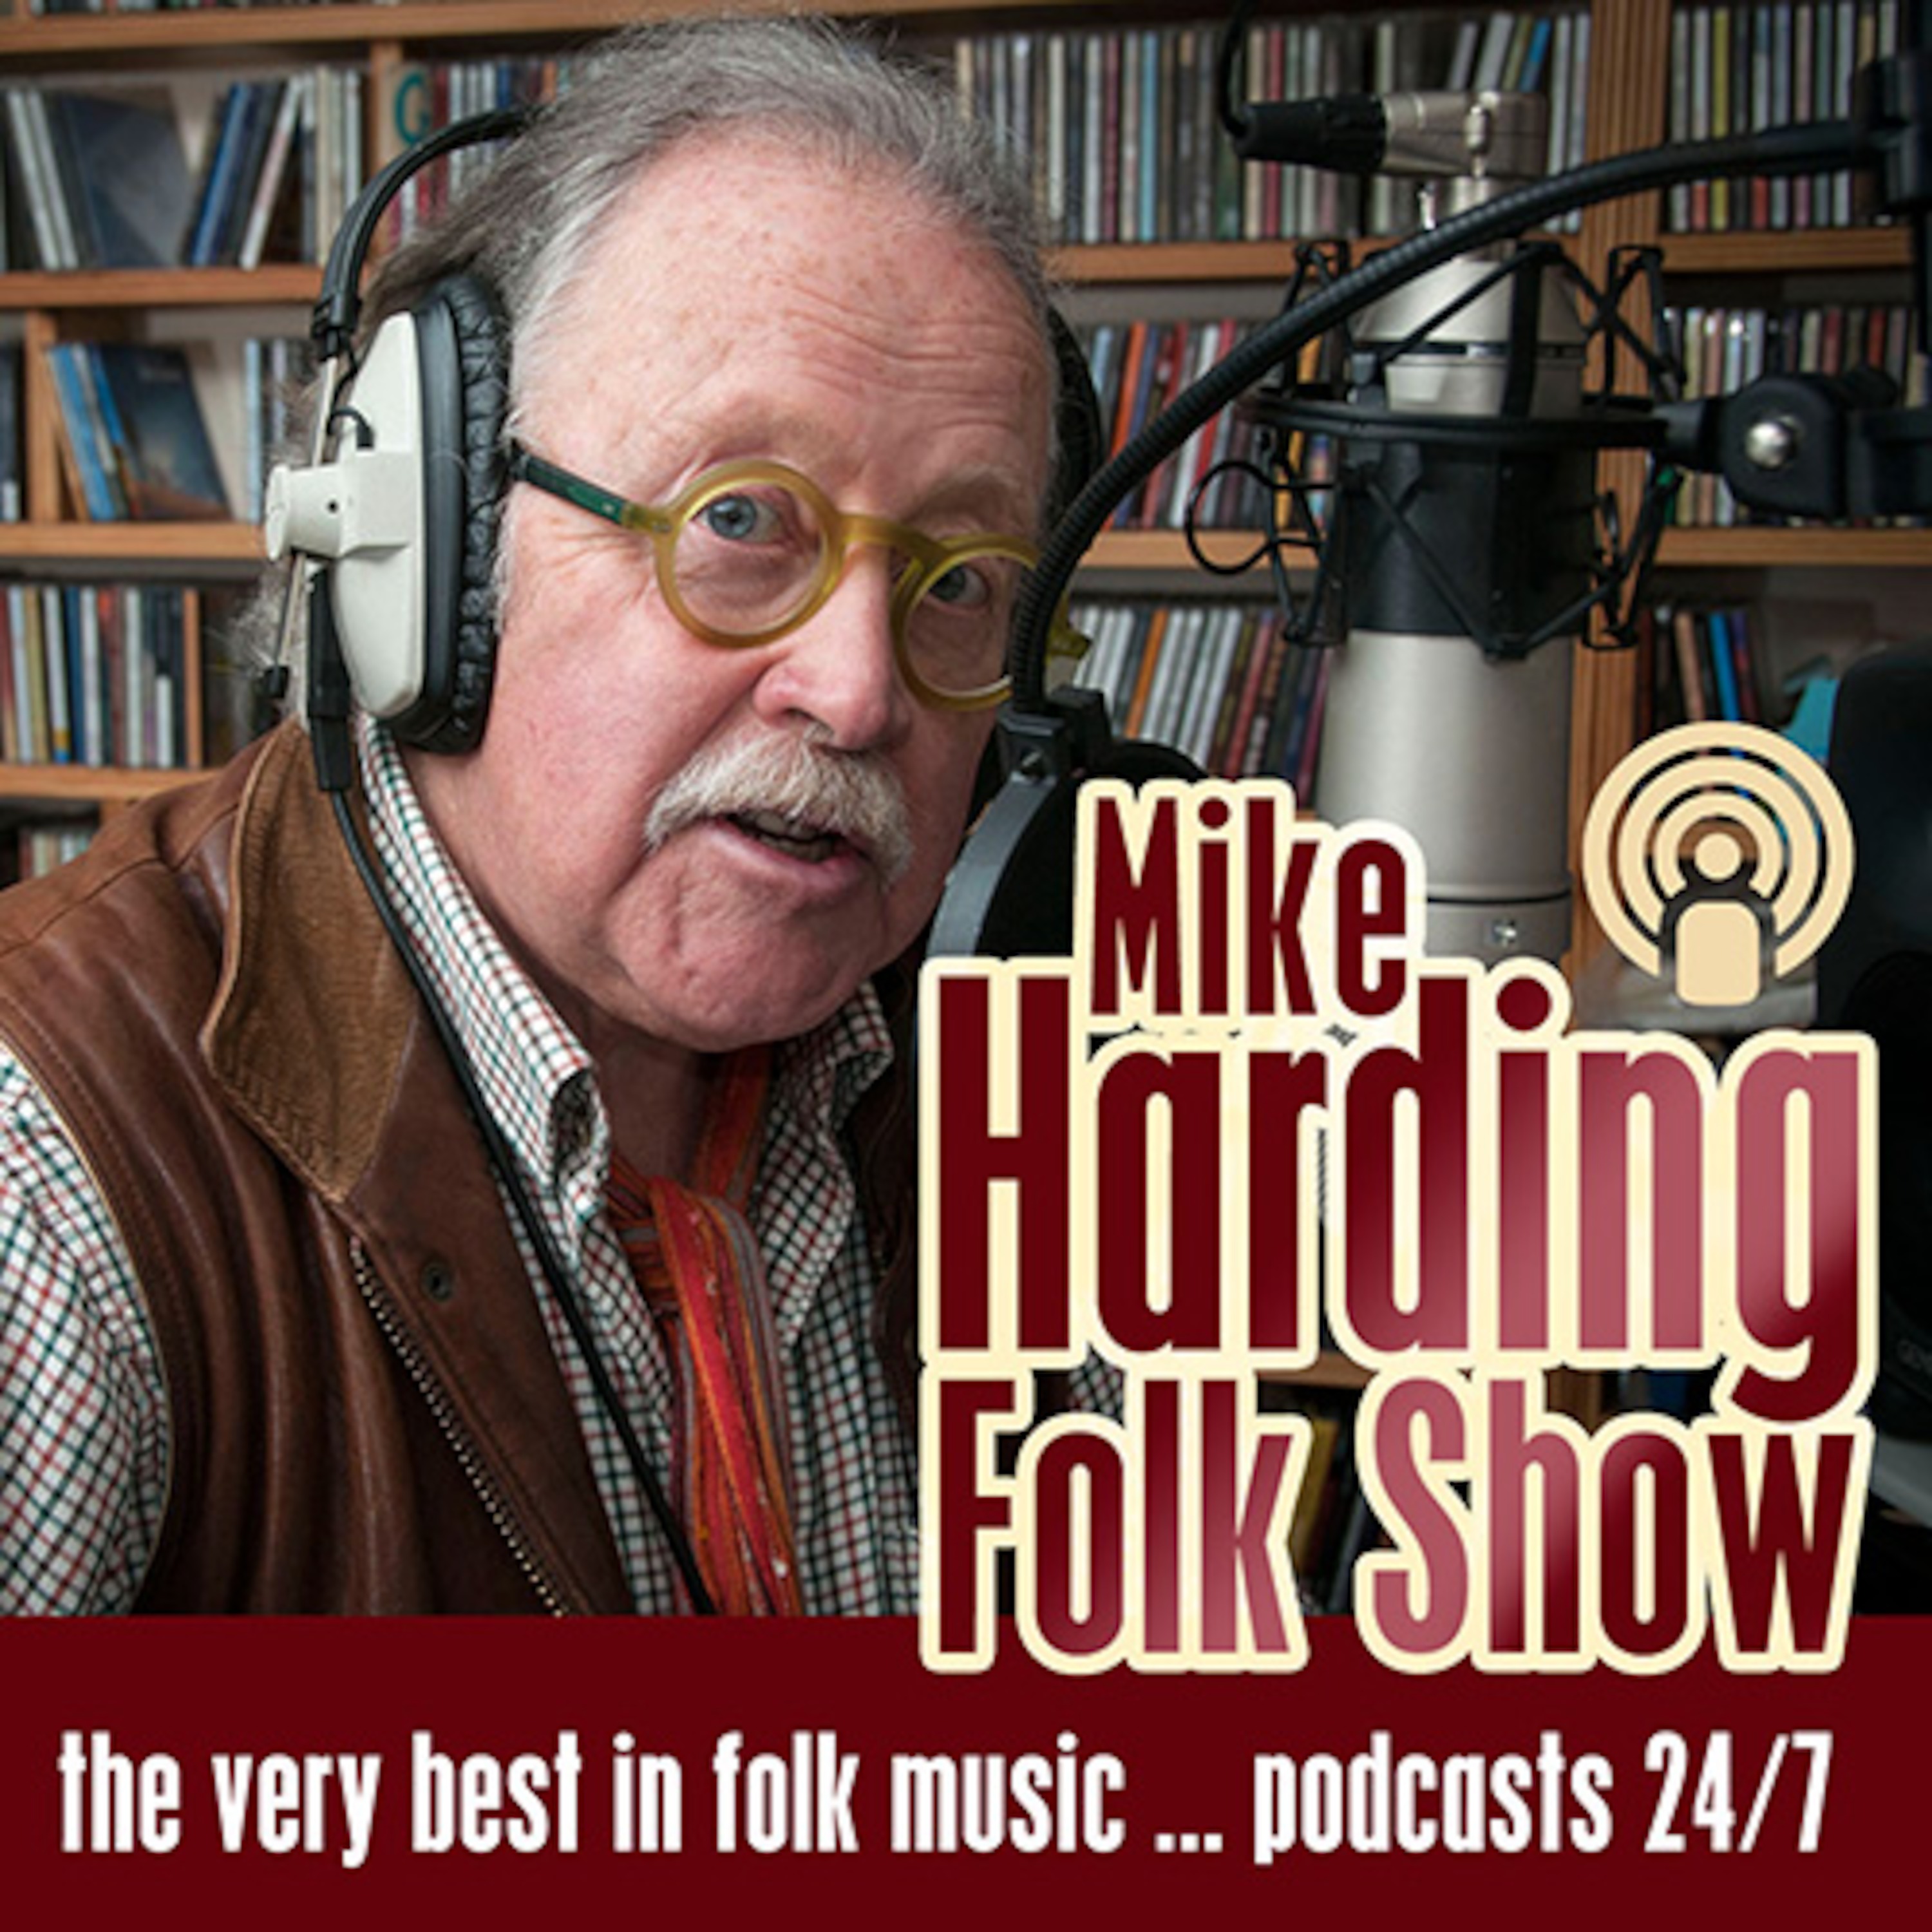 Mike Harding Folk Show 89